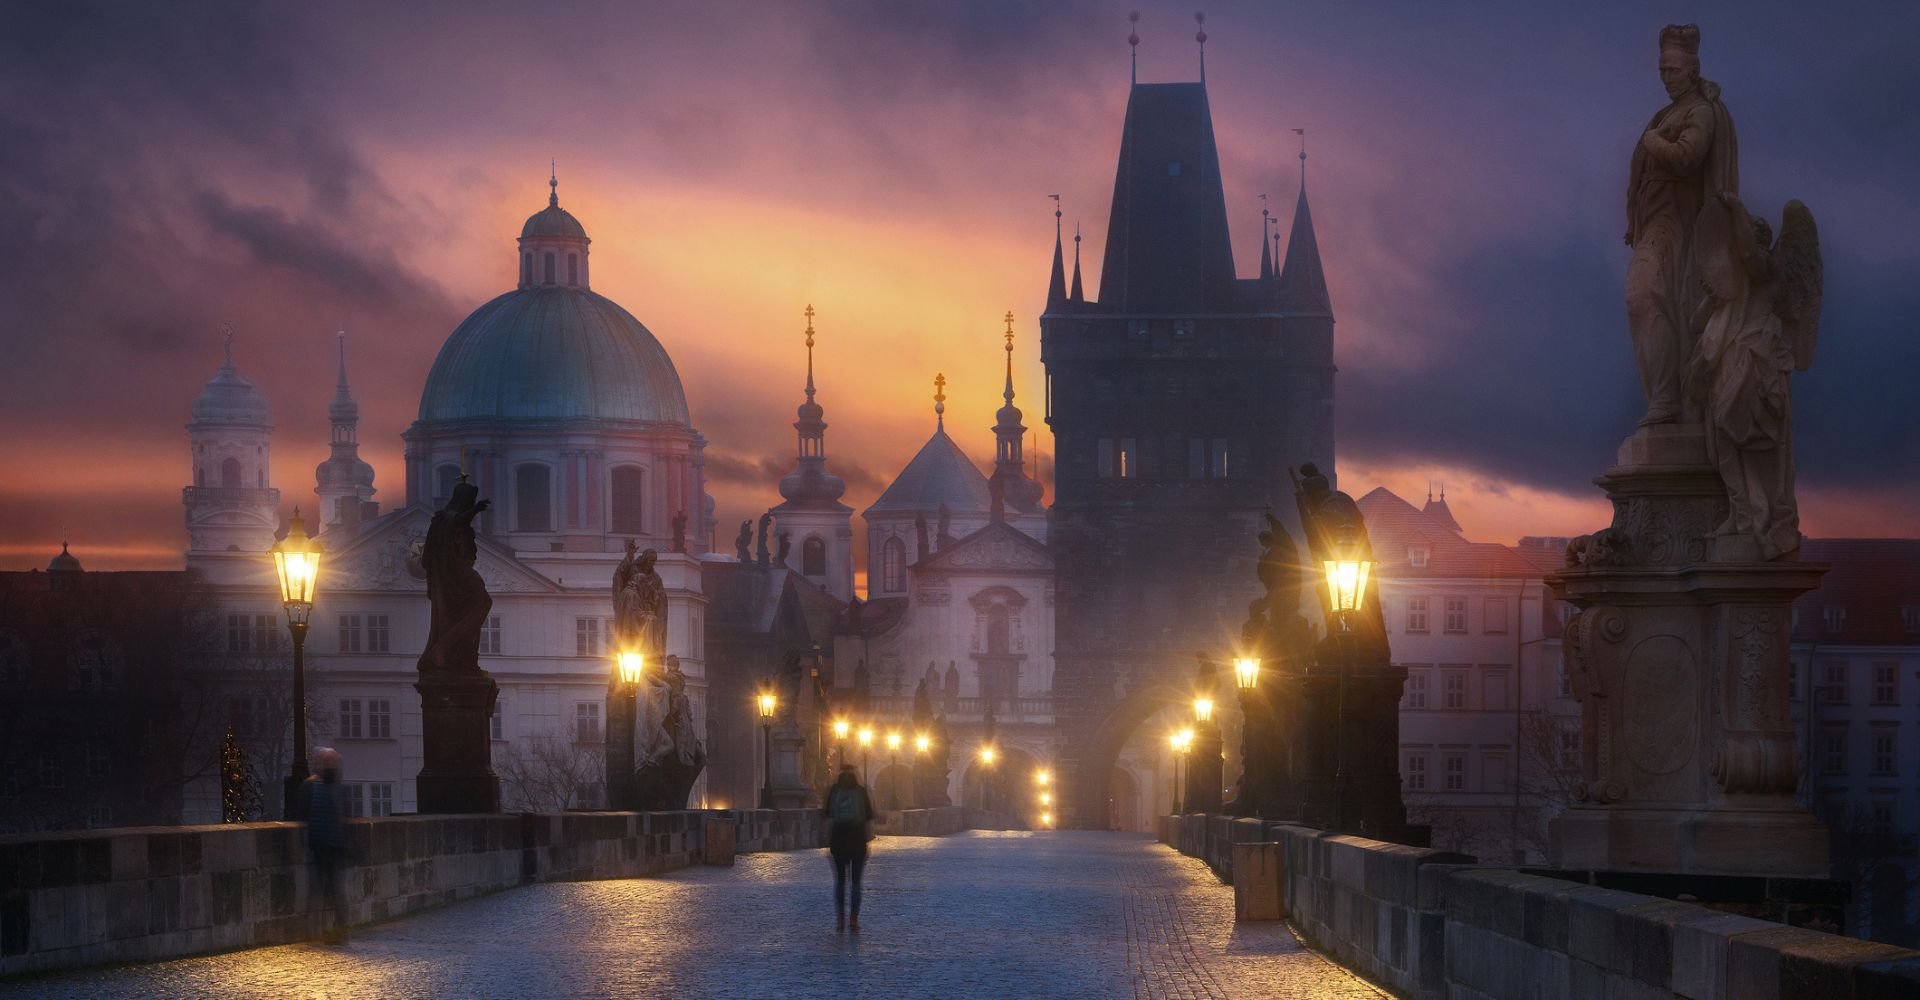 Tour letterari: i luoghi di Kafka a Praga, tra vicoli, ponti e caffè letterari